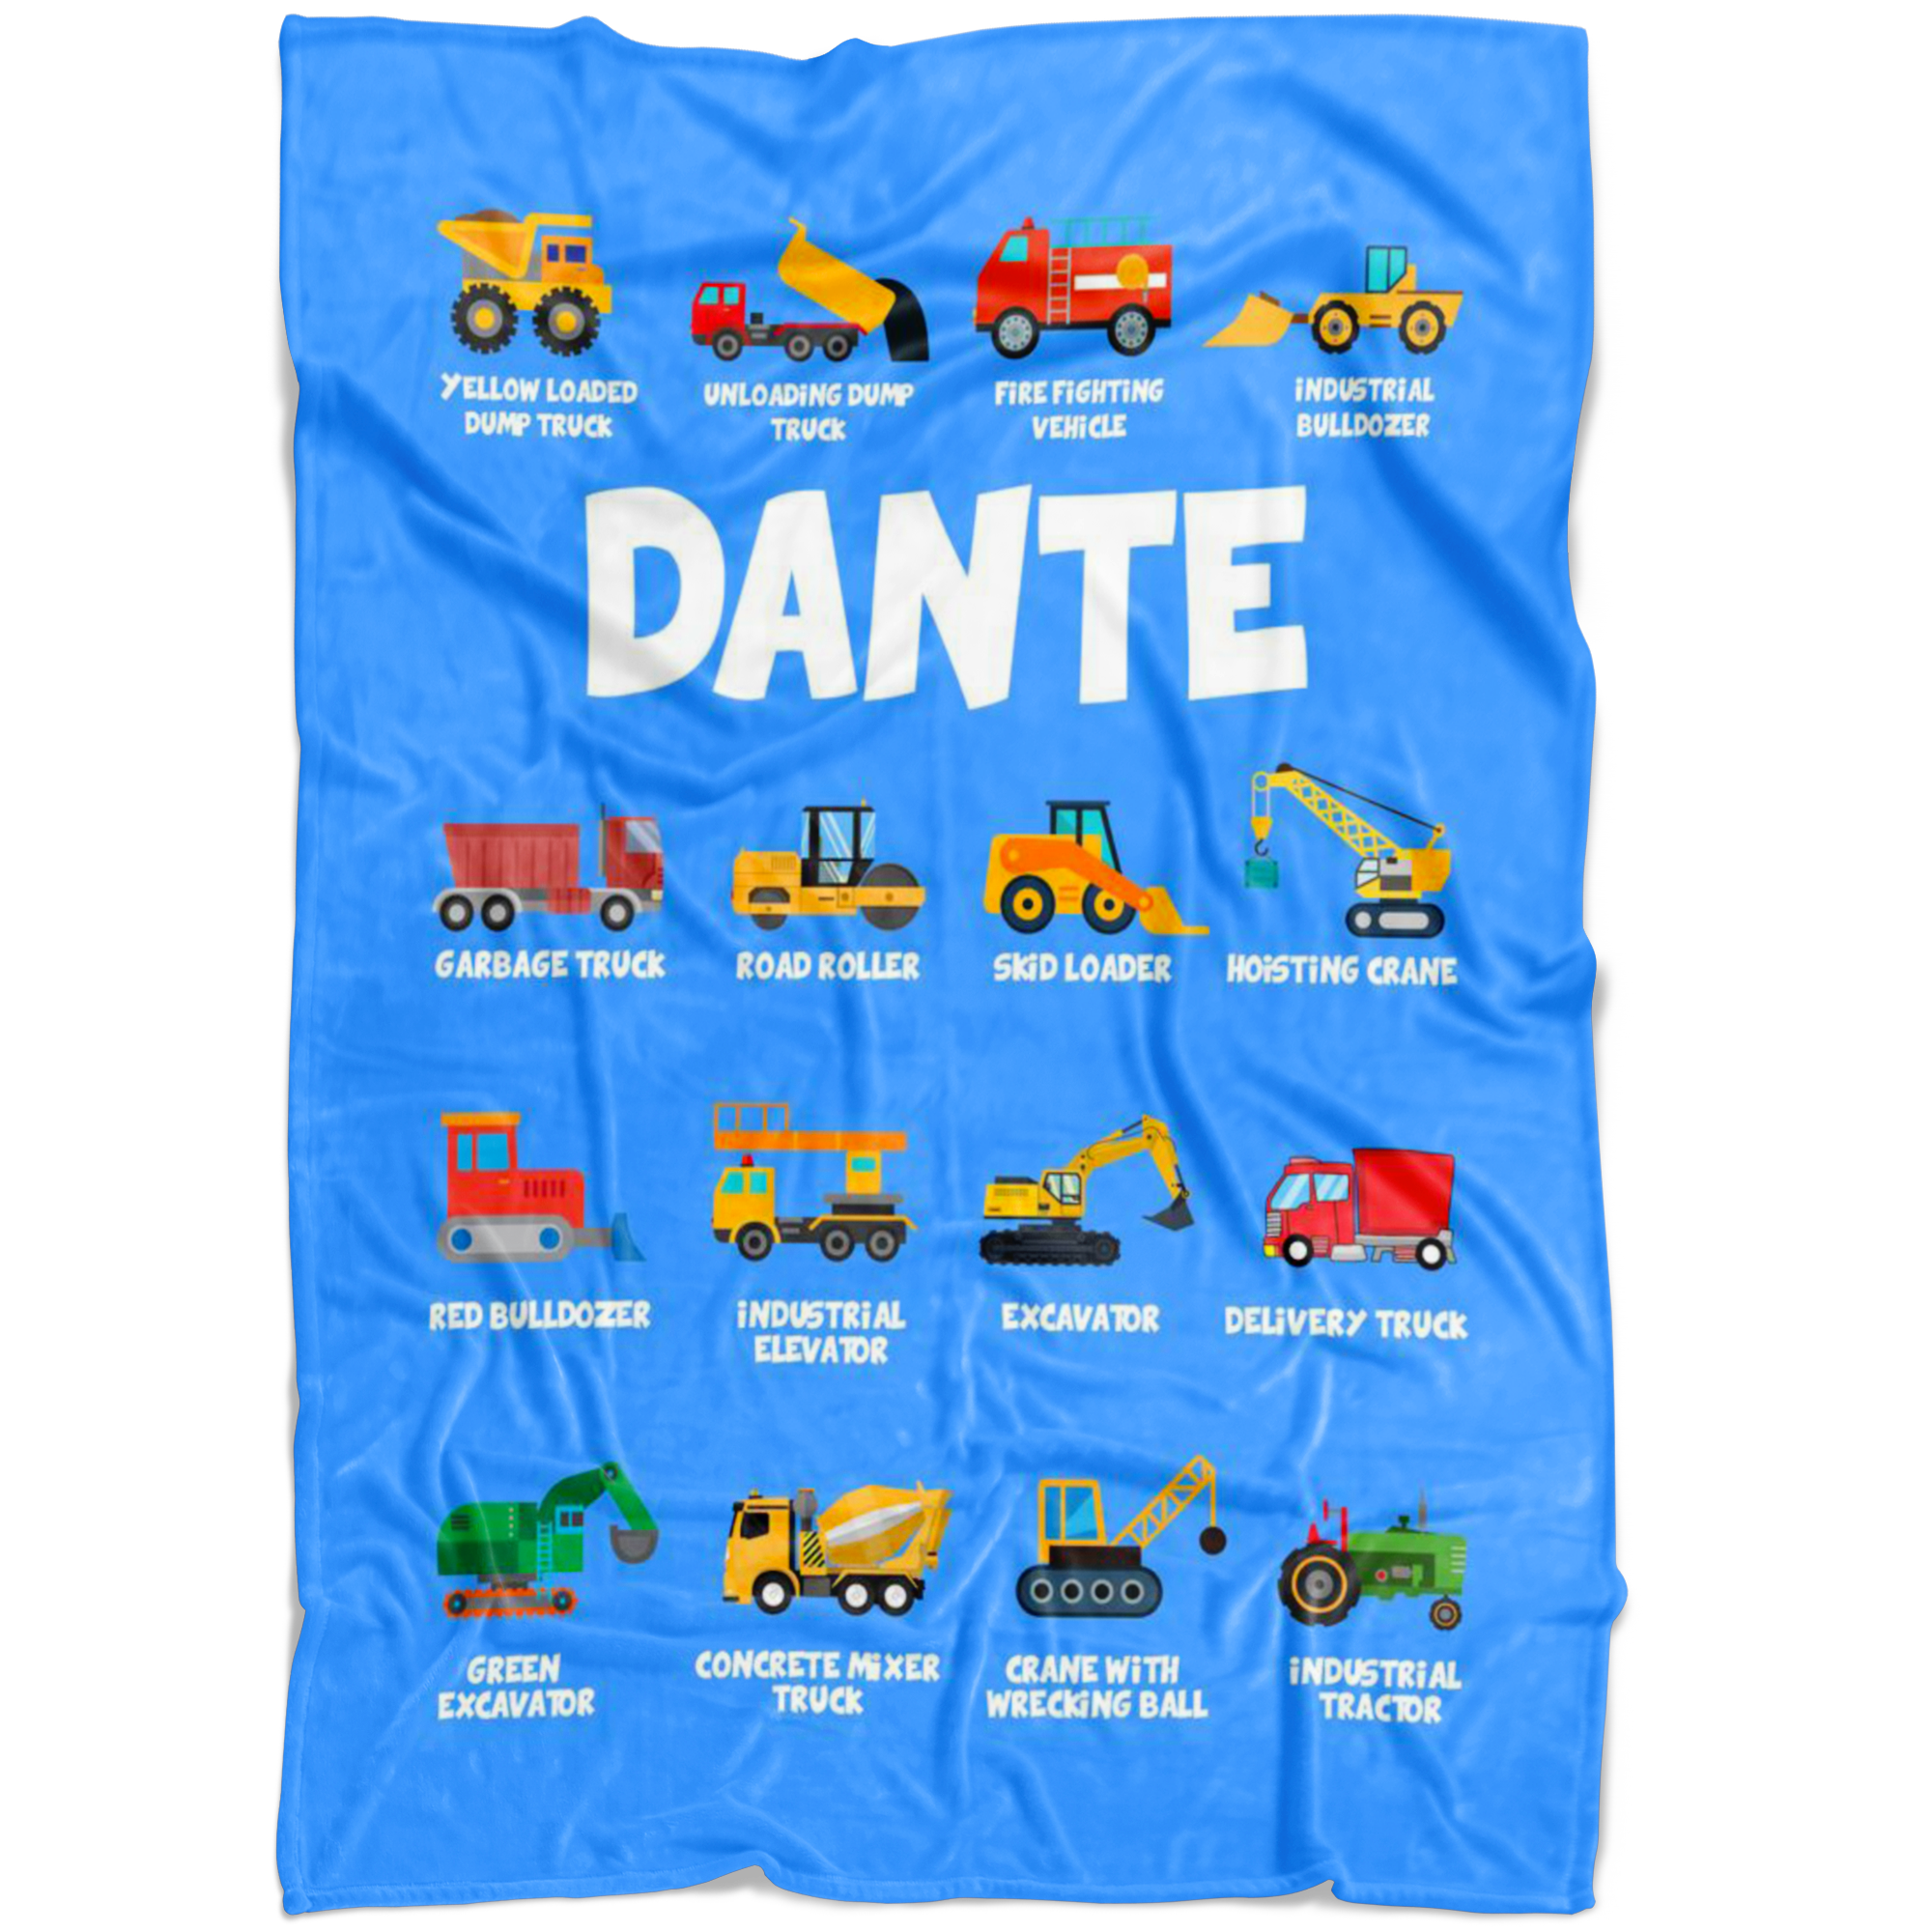 Dante Construction Blanket Blue